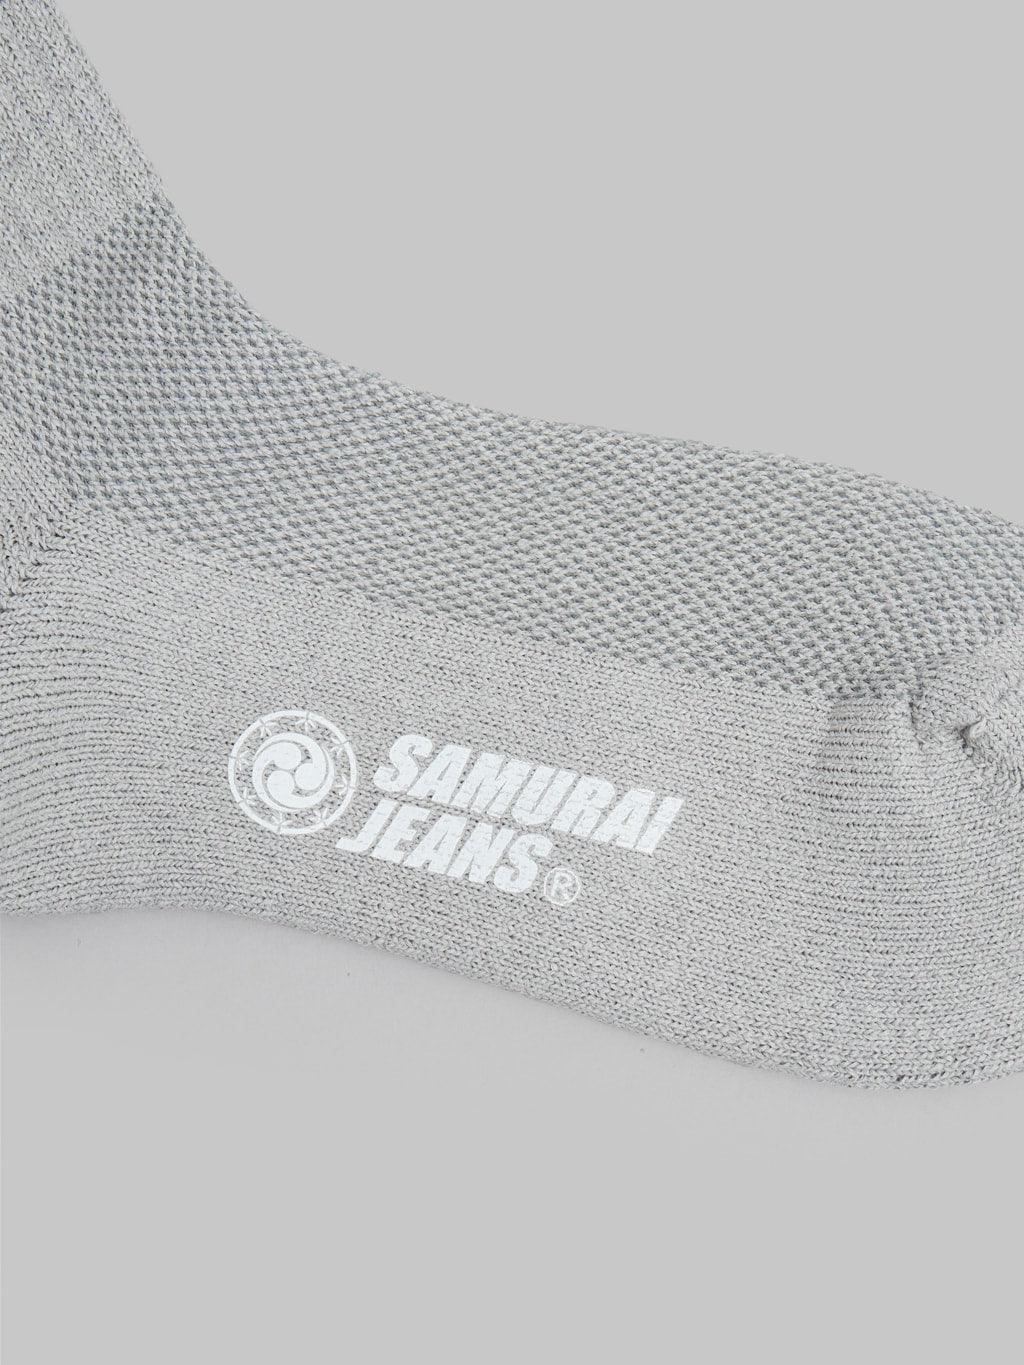 Samurai Jeans SJKS24 Japanese "Washi Paper" Socks Grey